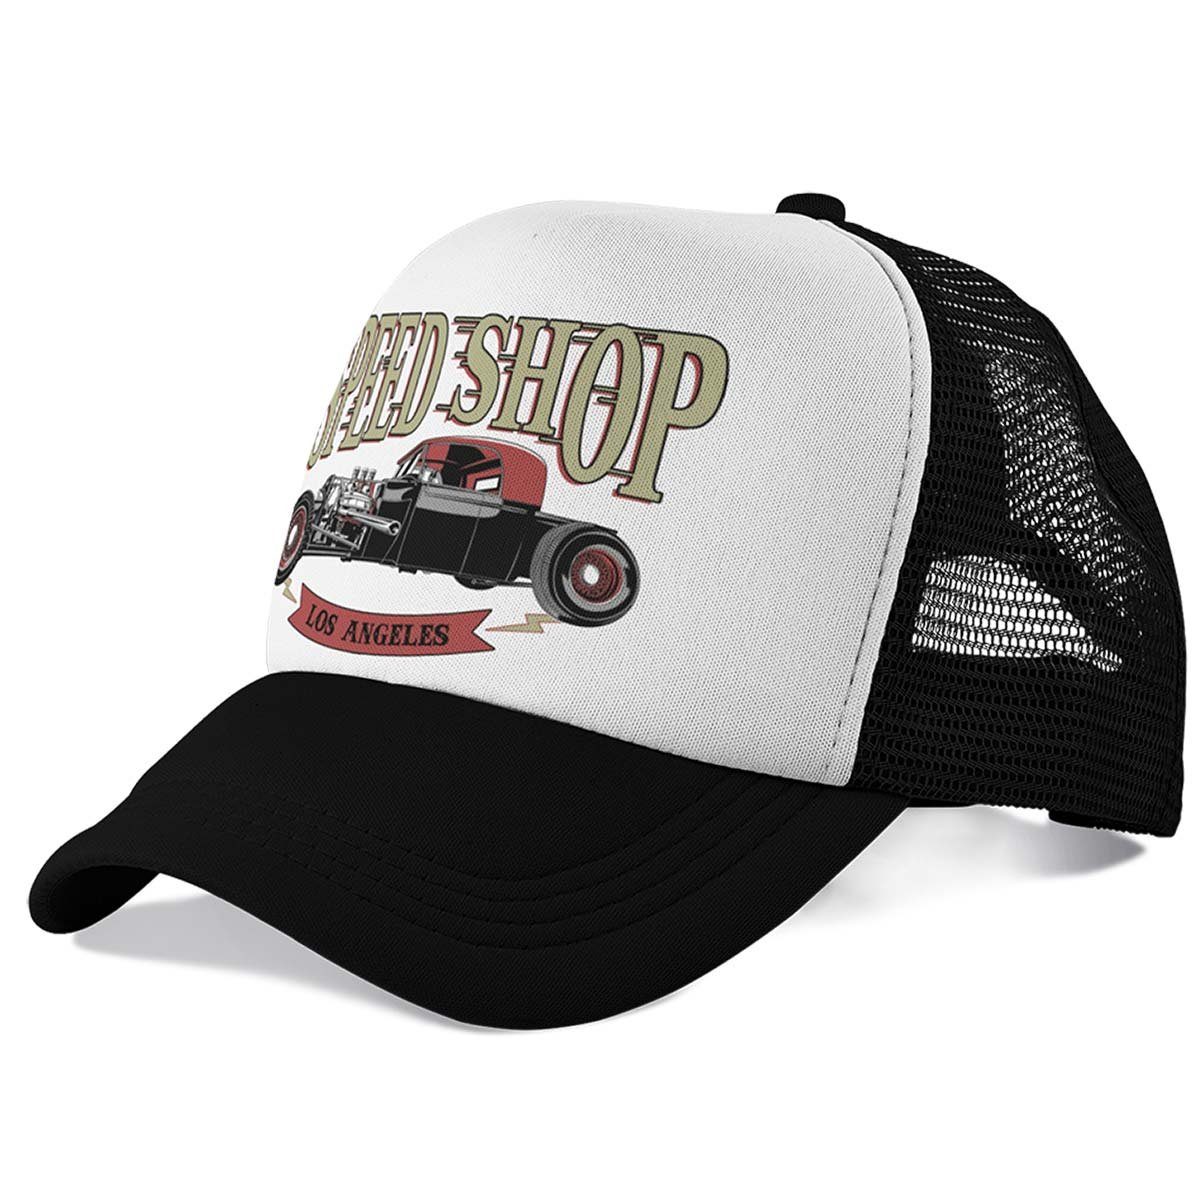 Rebel On Wheels Trucker Cap Baseball Cap Curved Visor Speedshop LA